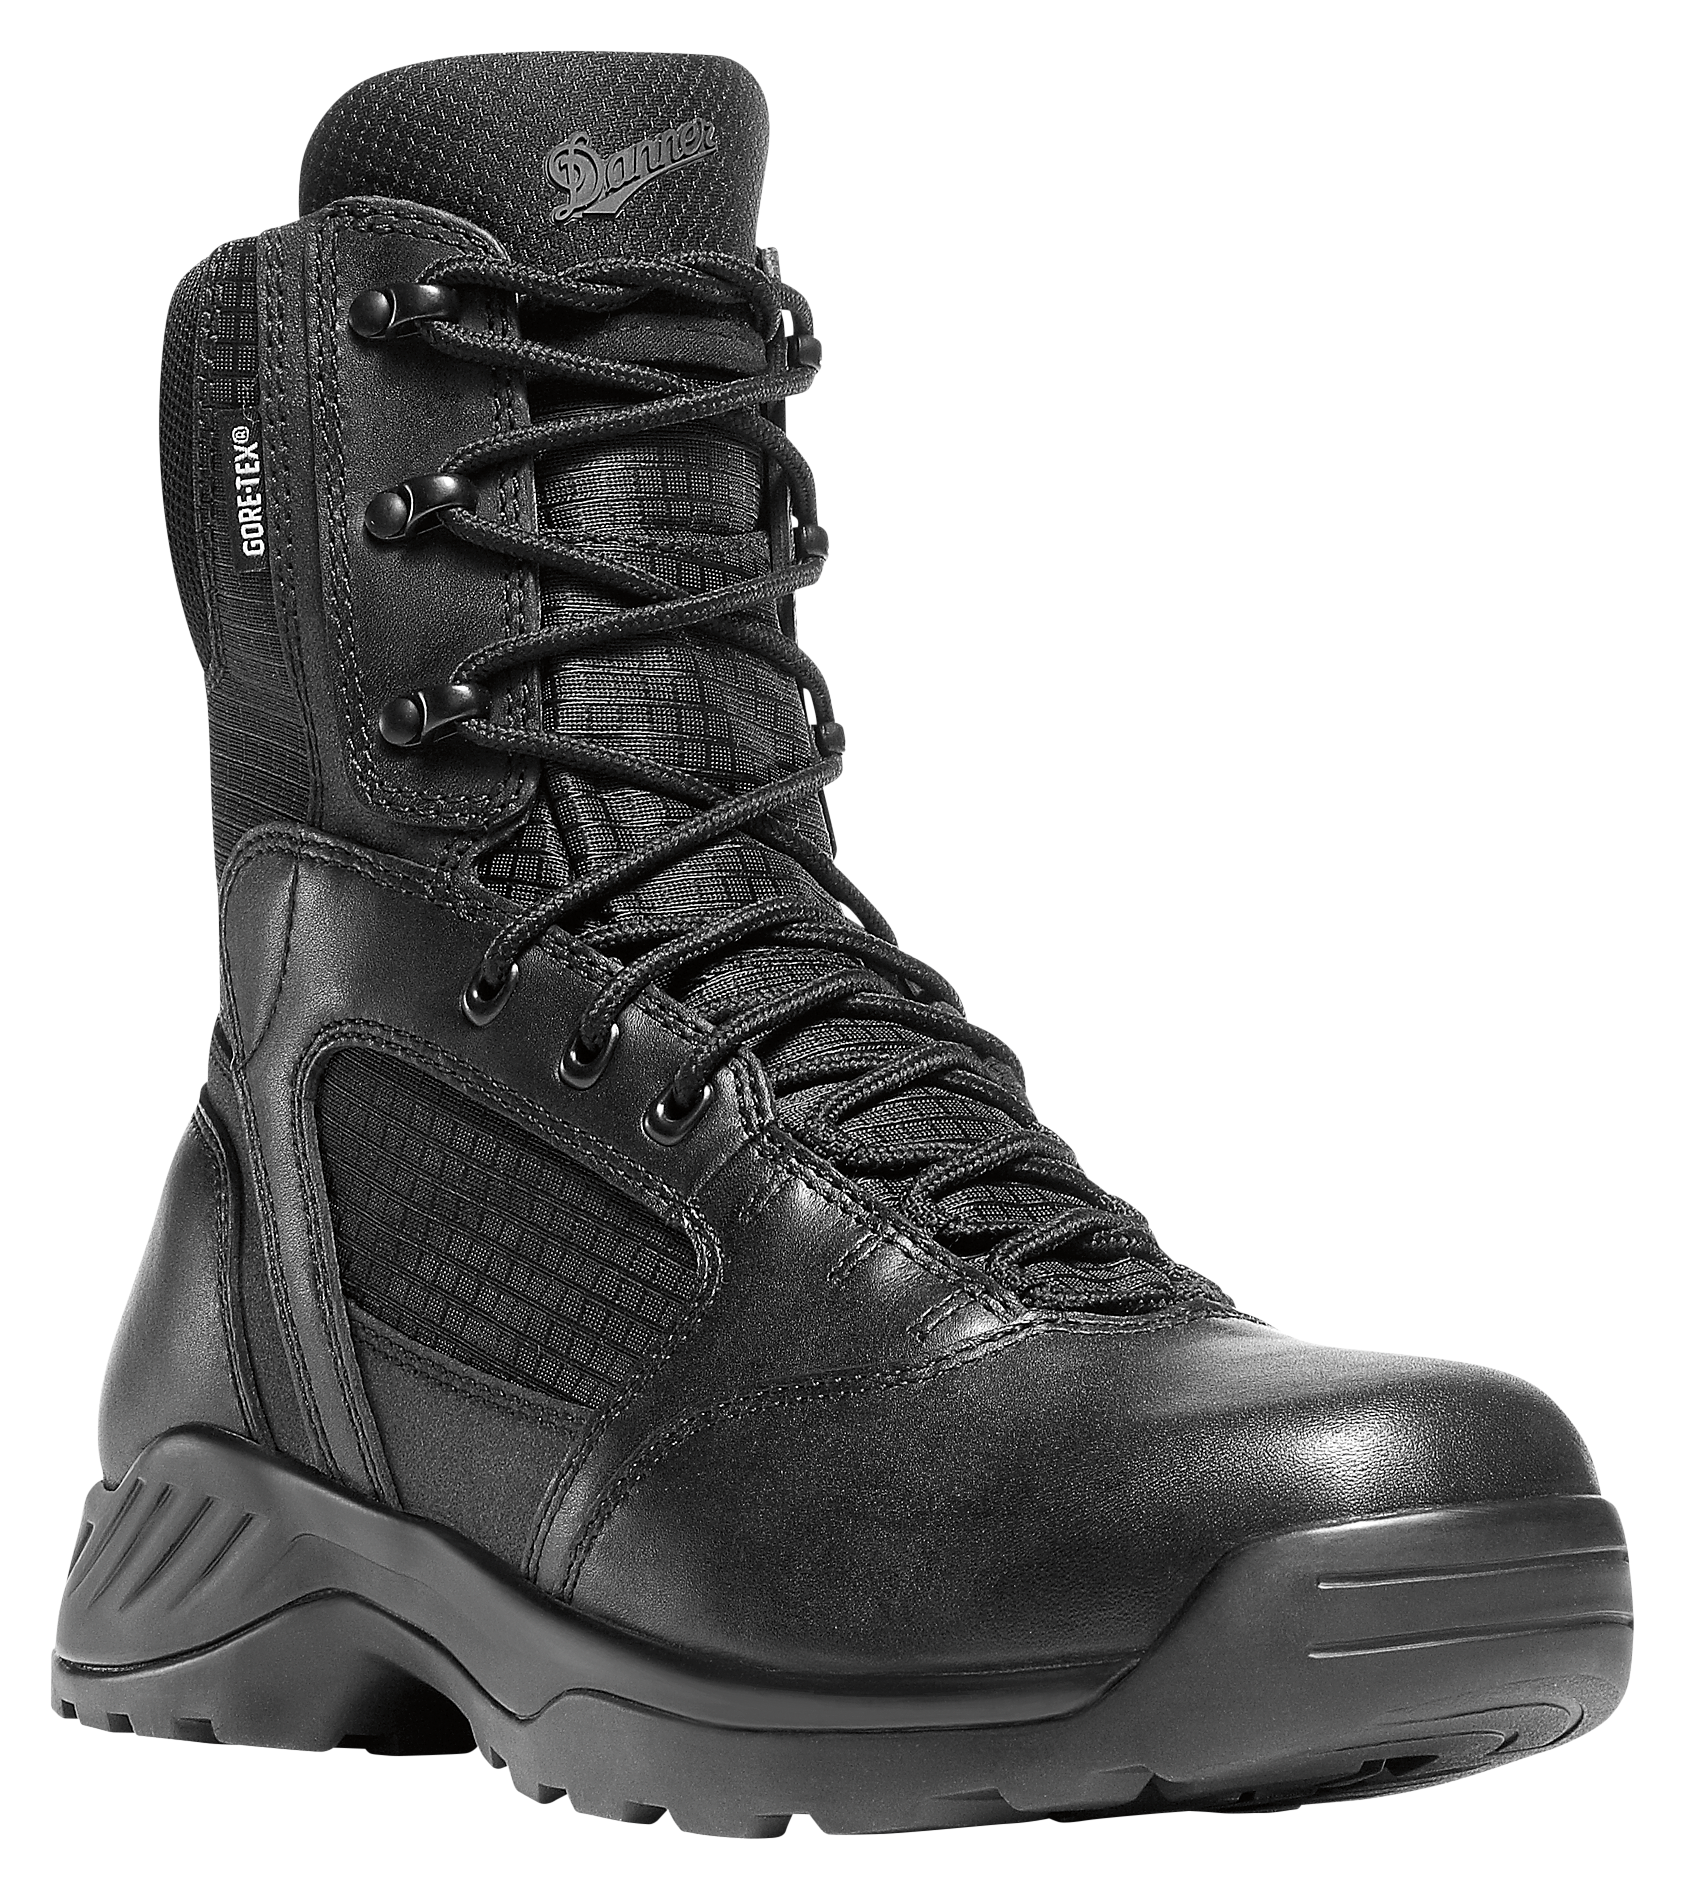 Danner Kinetic GTX Side-Zip Waterproof Tactical Duty Boots for Men - Black - 10M